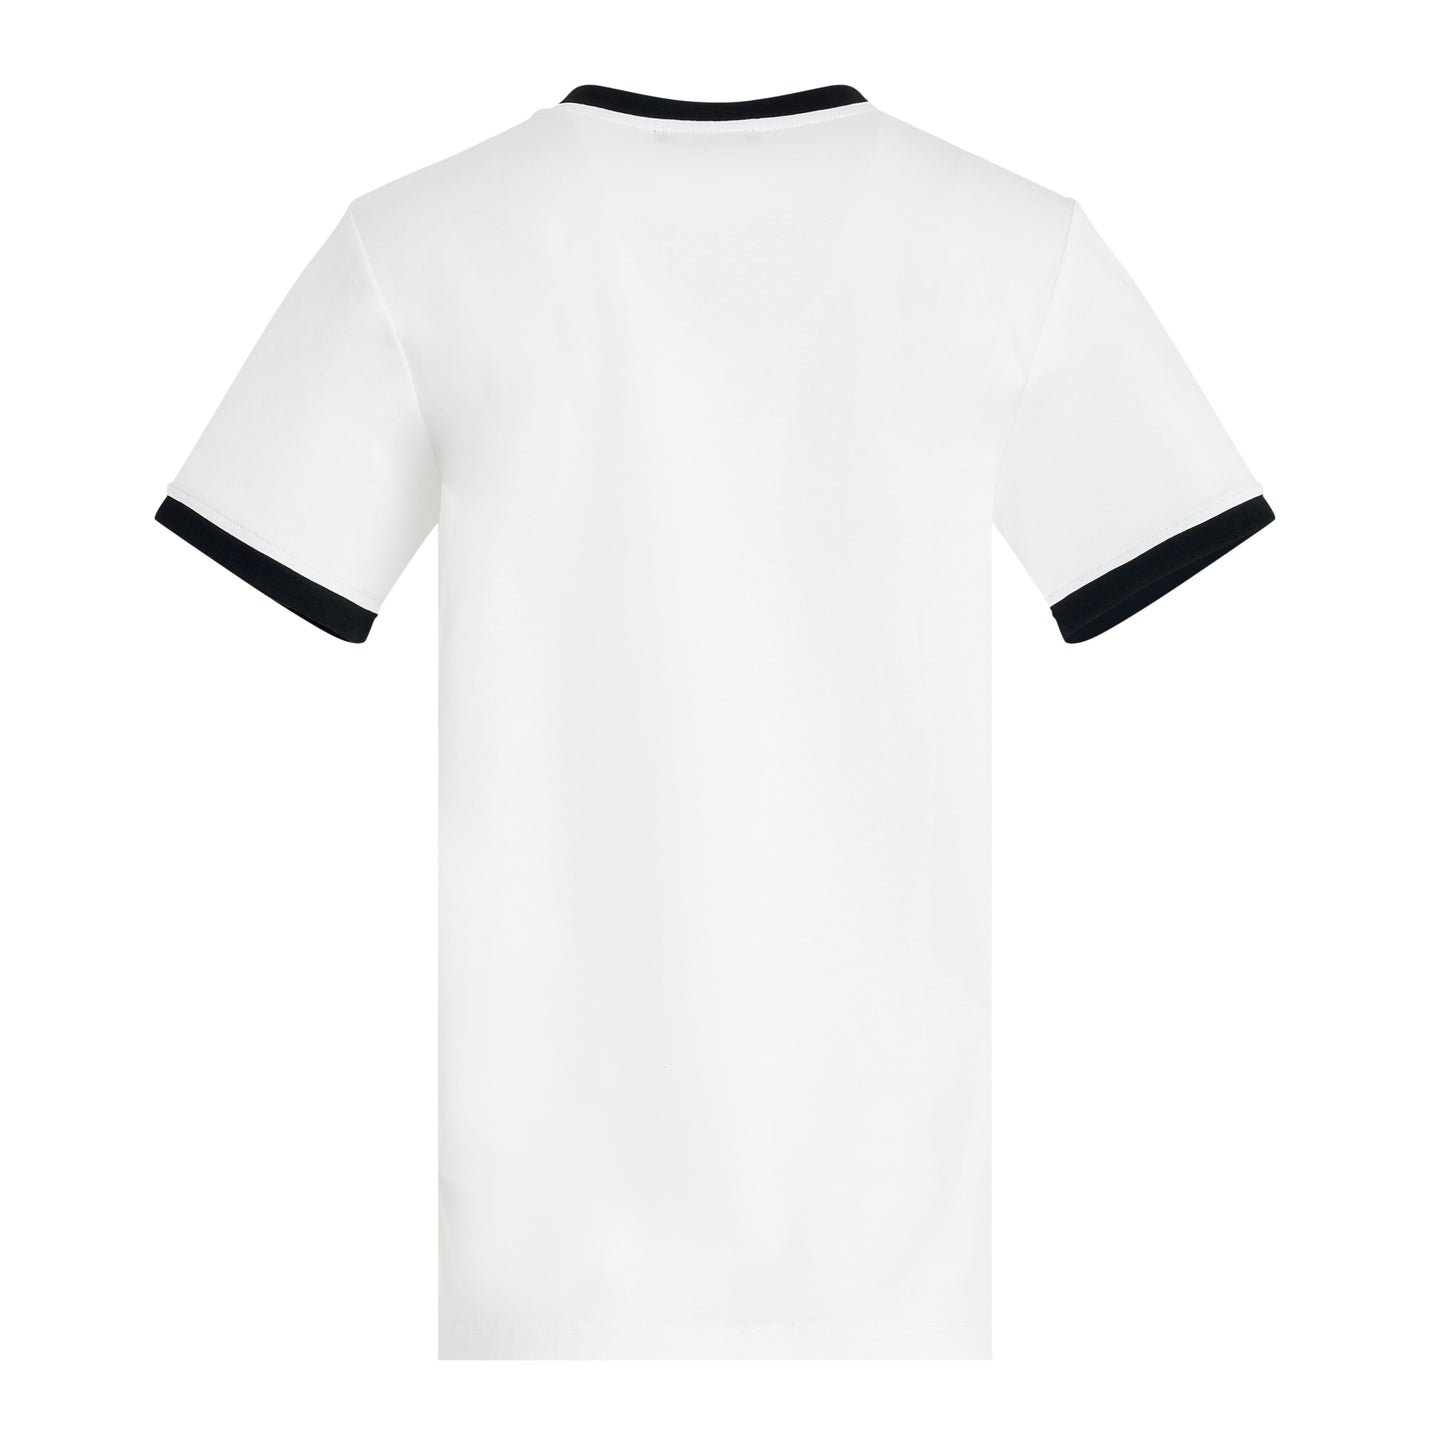 3 Button Balmain Print Bicolour T-Shirt in White/Black